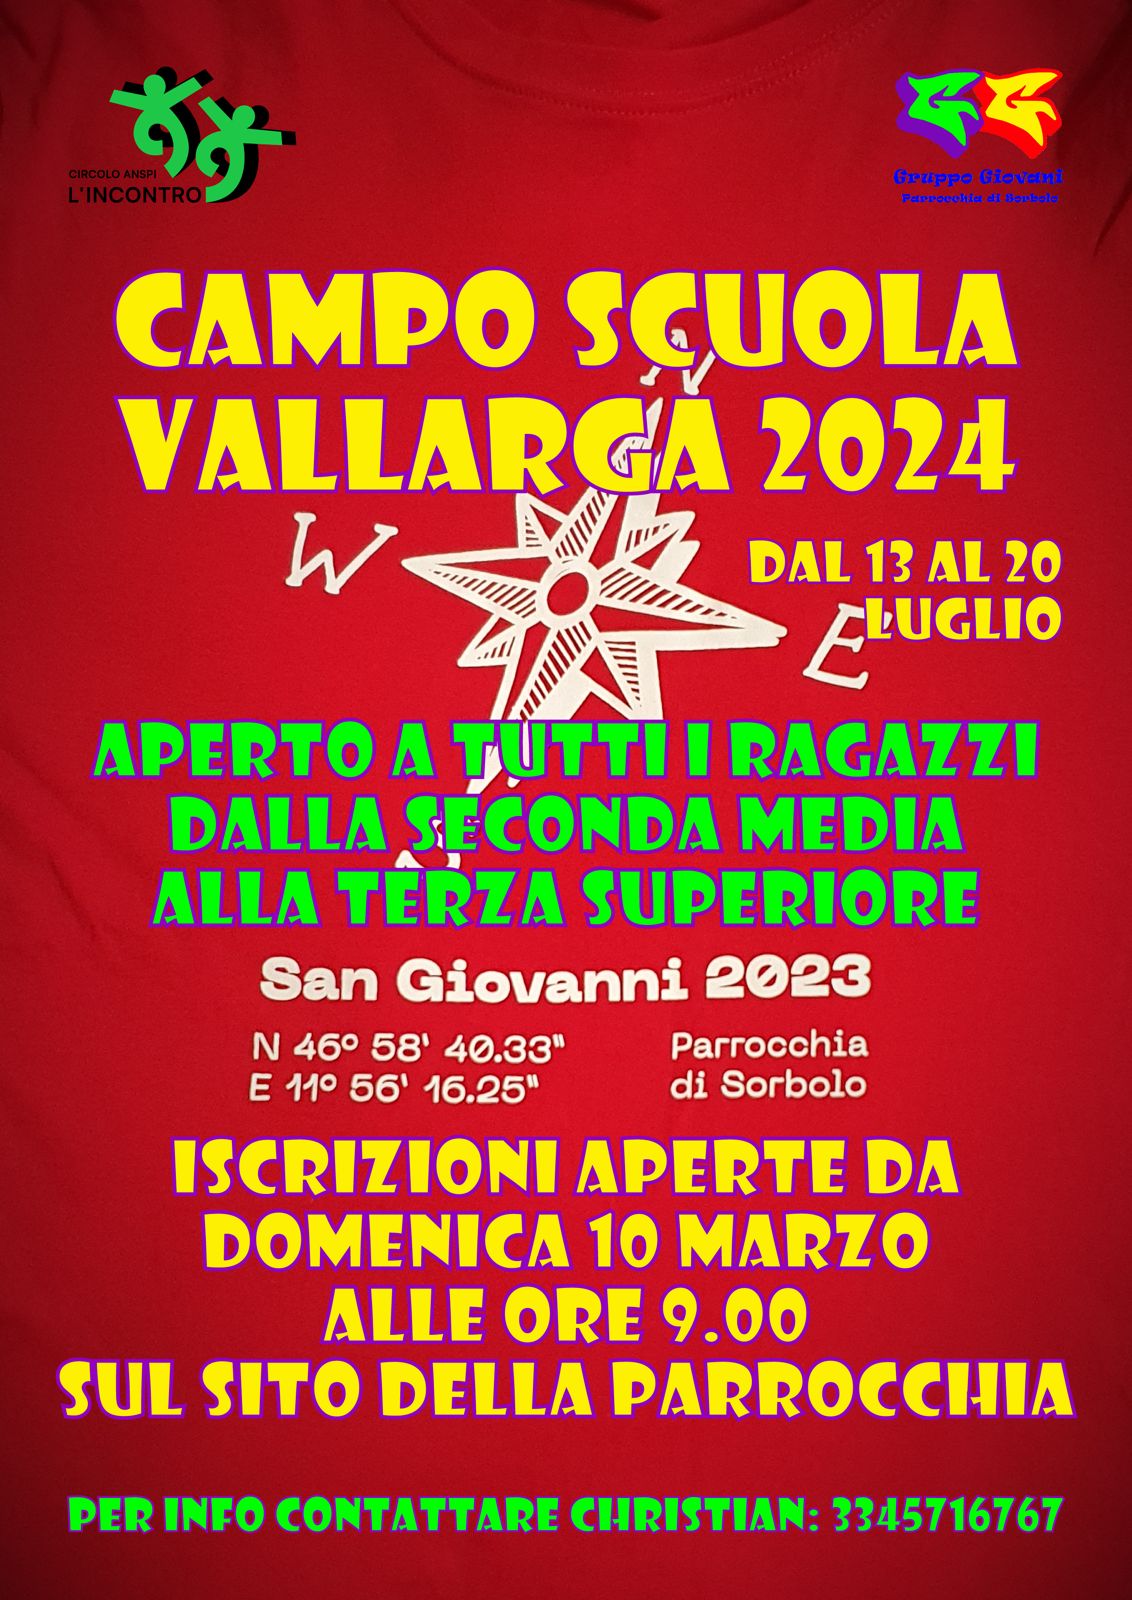 Campo Vallarga 2024